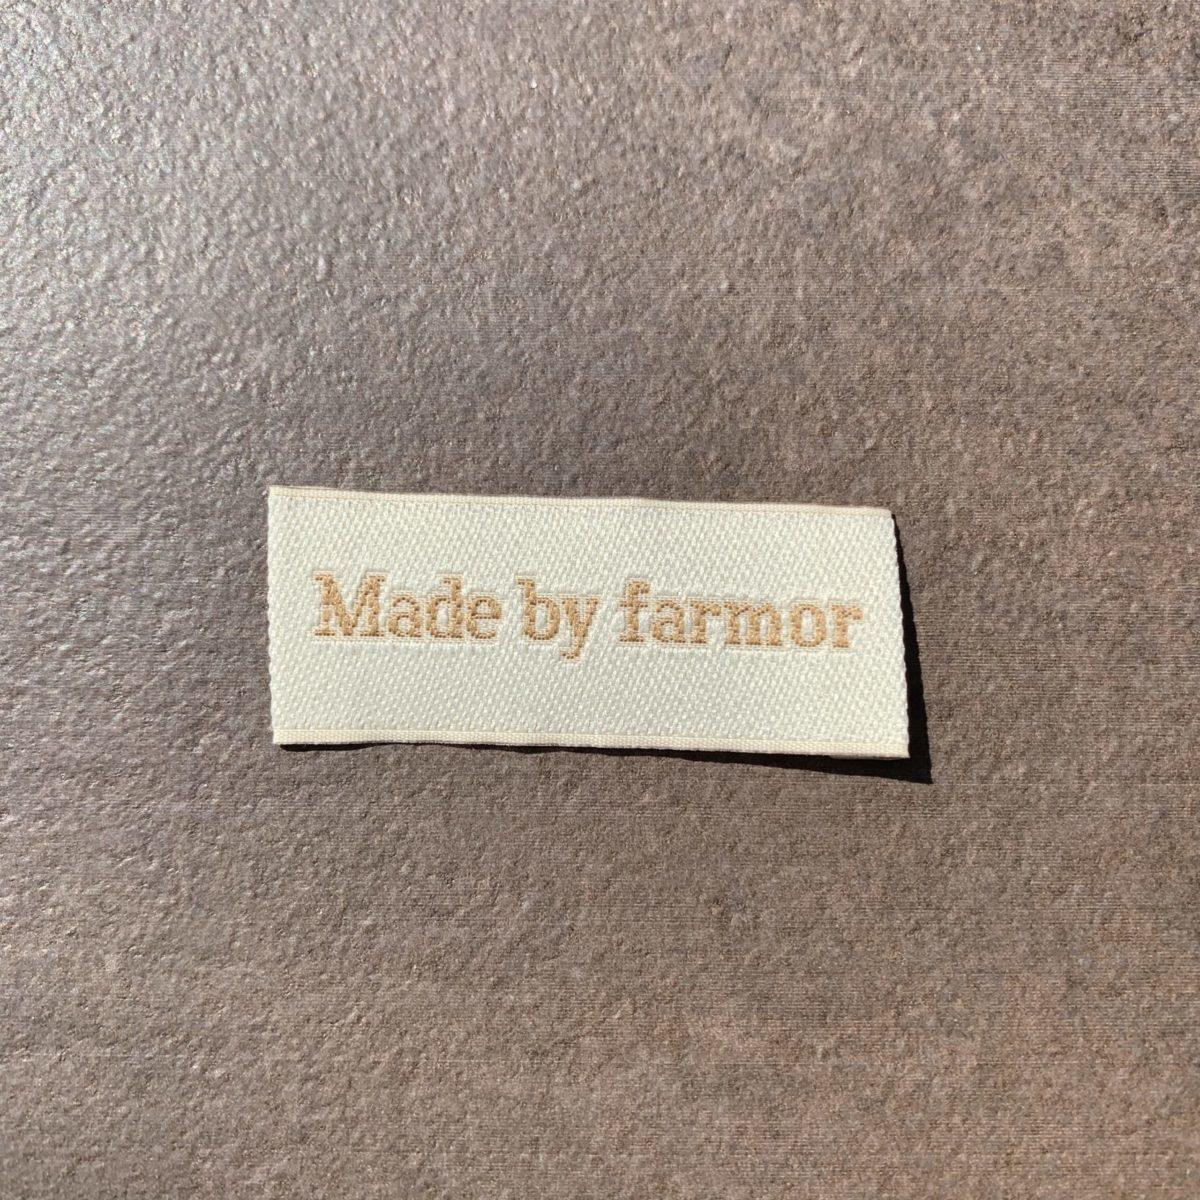 Made by farmor